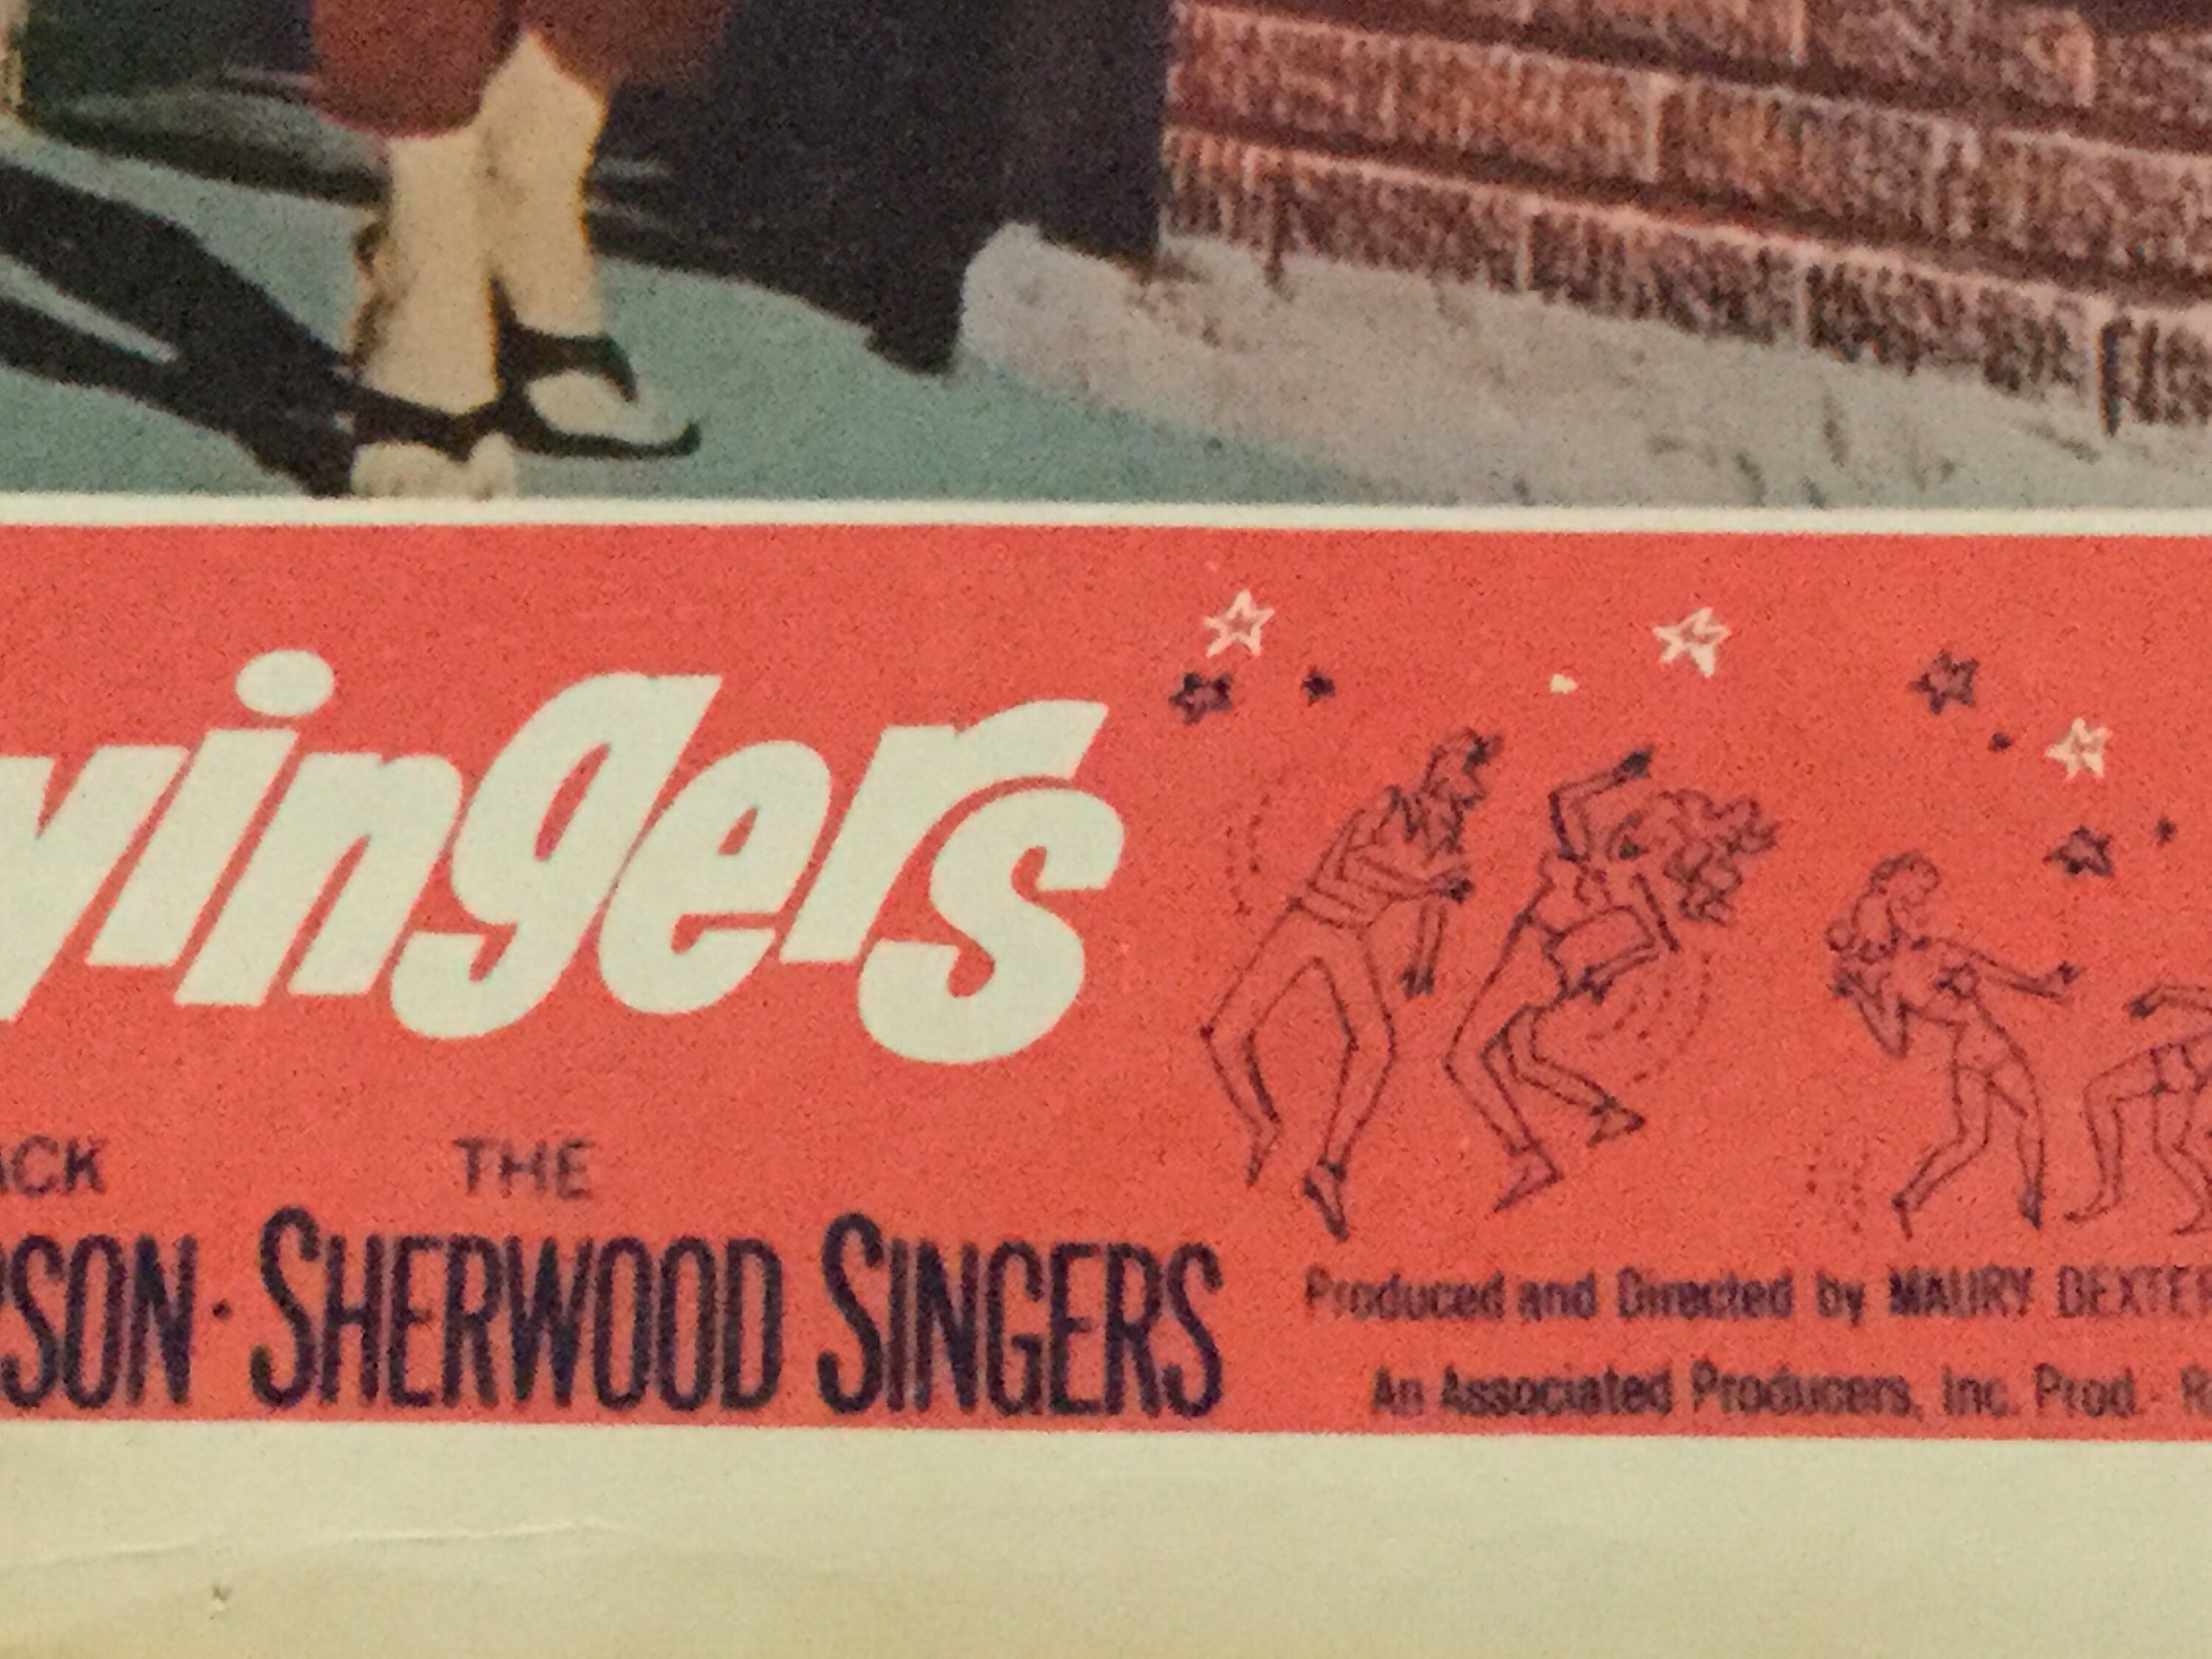 sherwood singers the young swingers Adult Pics Hq